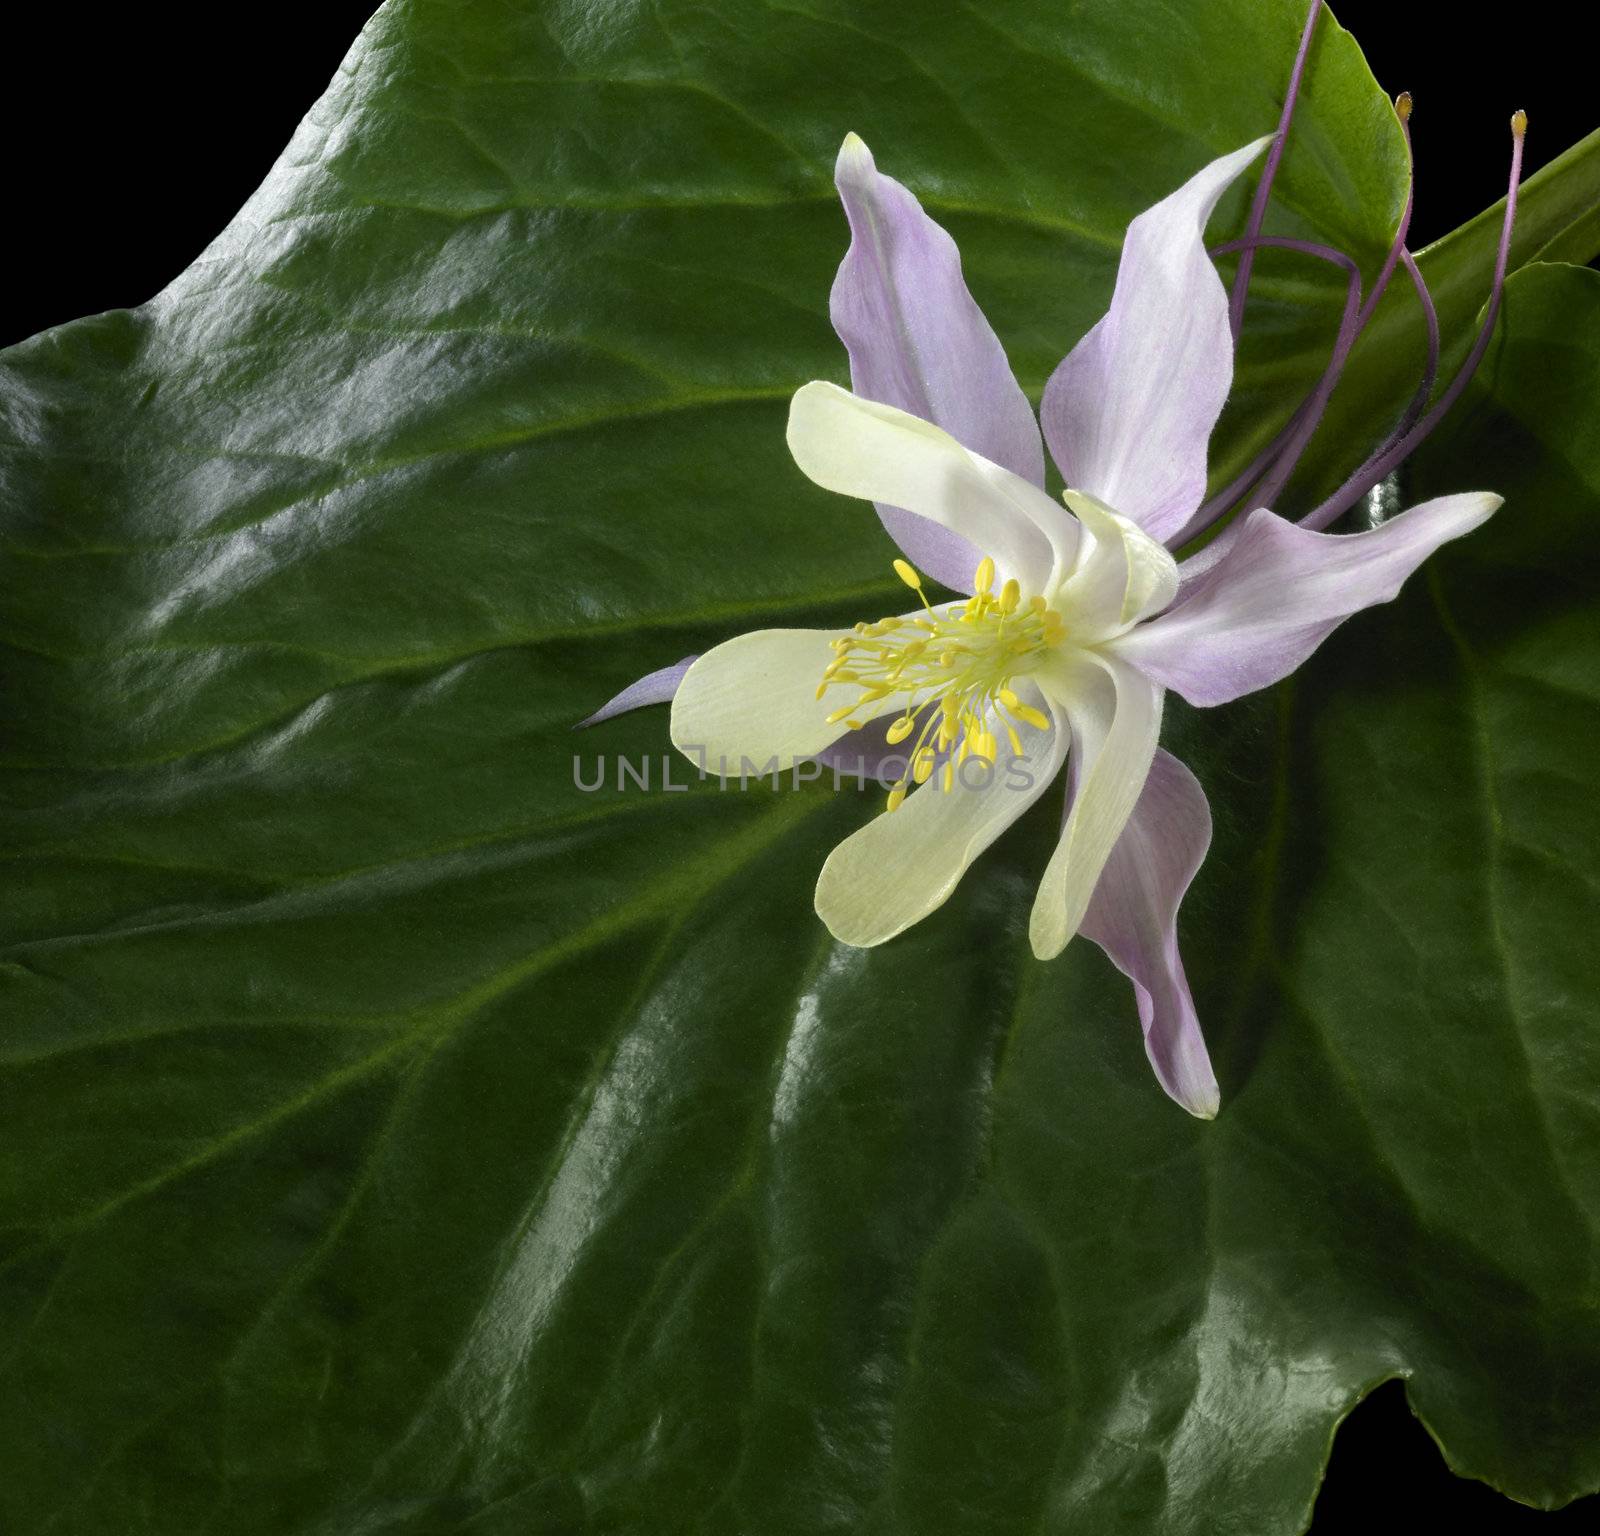 decorative studio photography of a Aquilegia flower upon big green leaf in black back